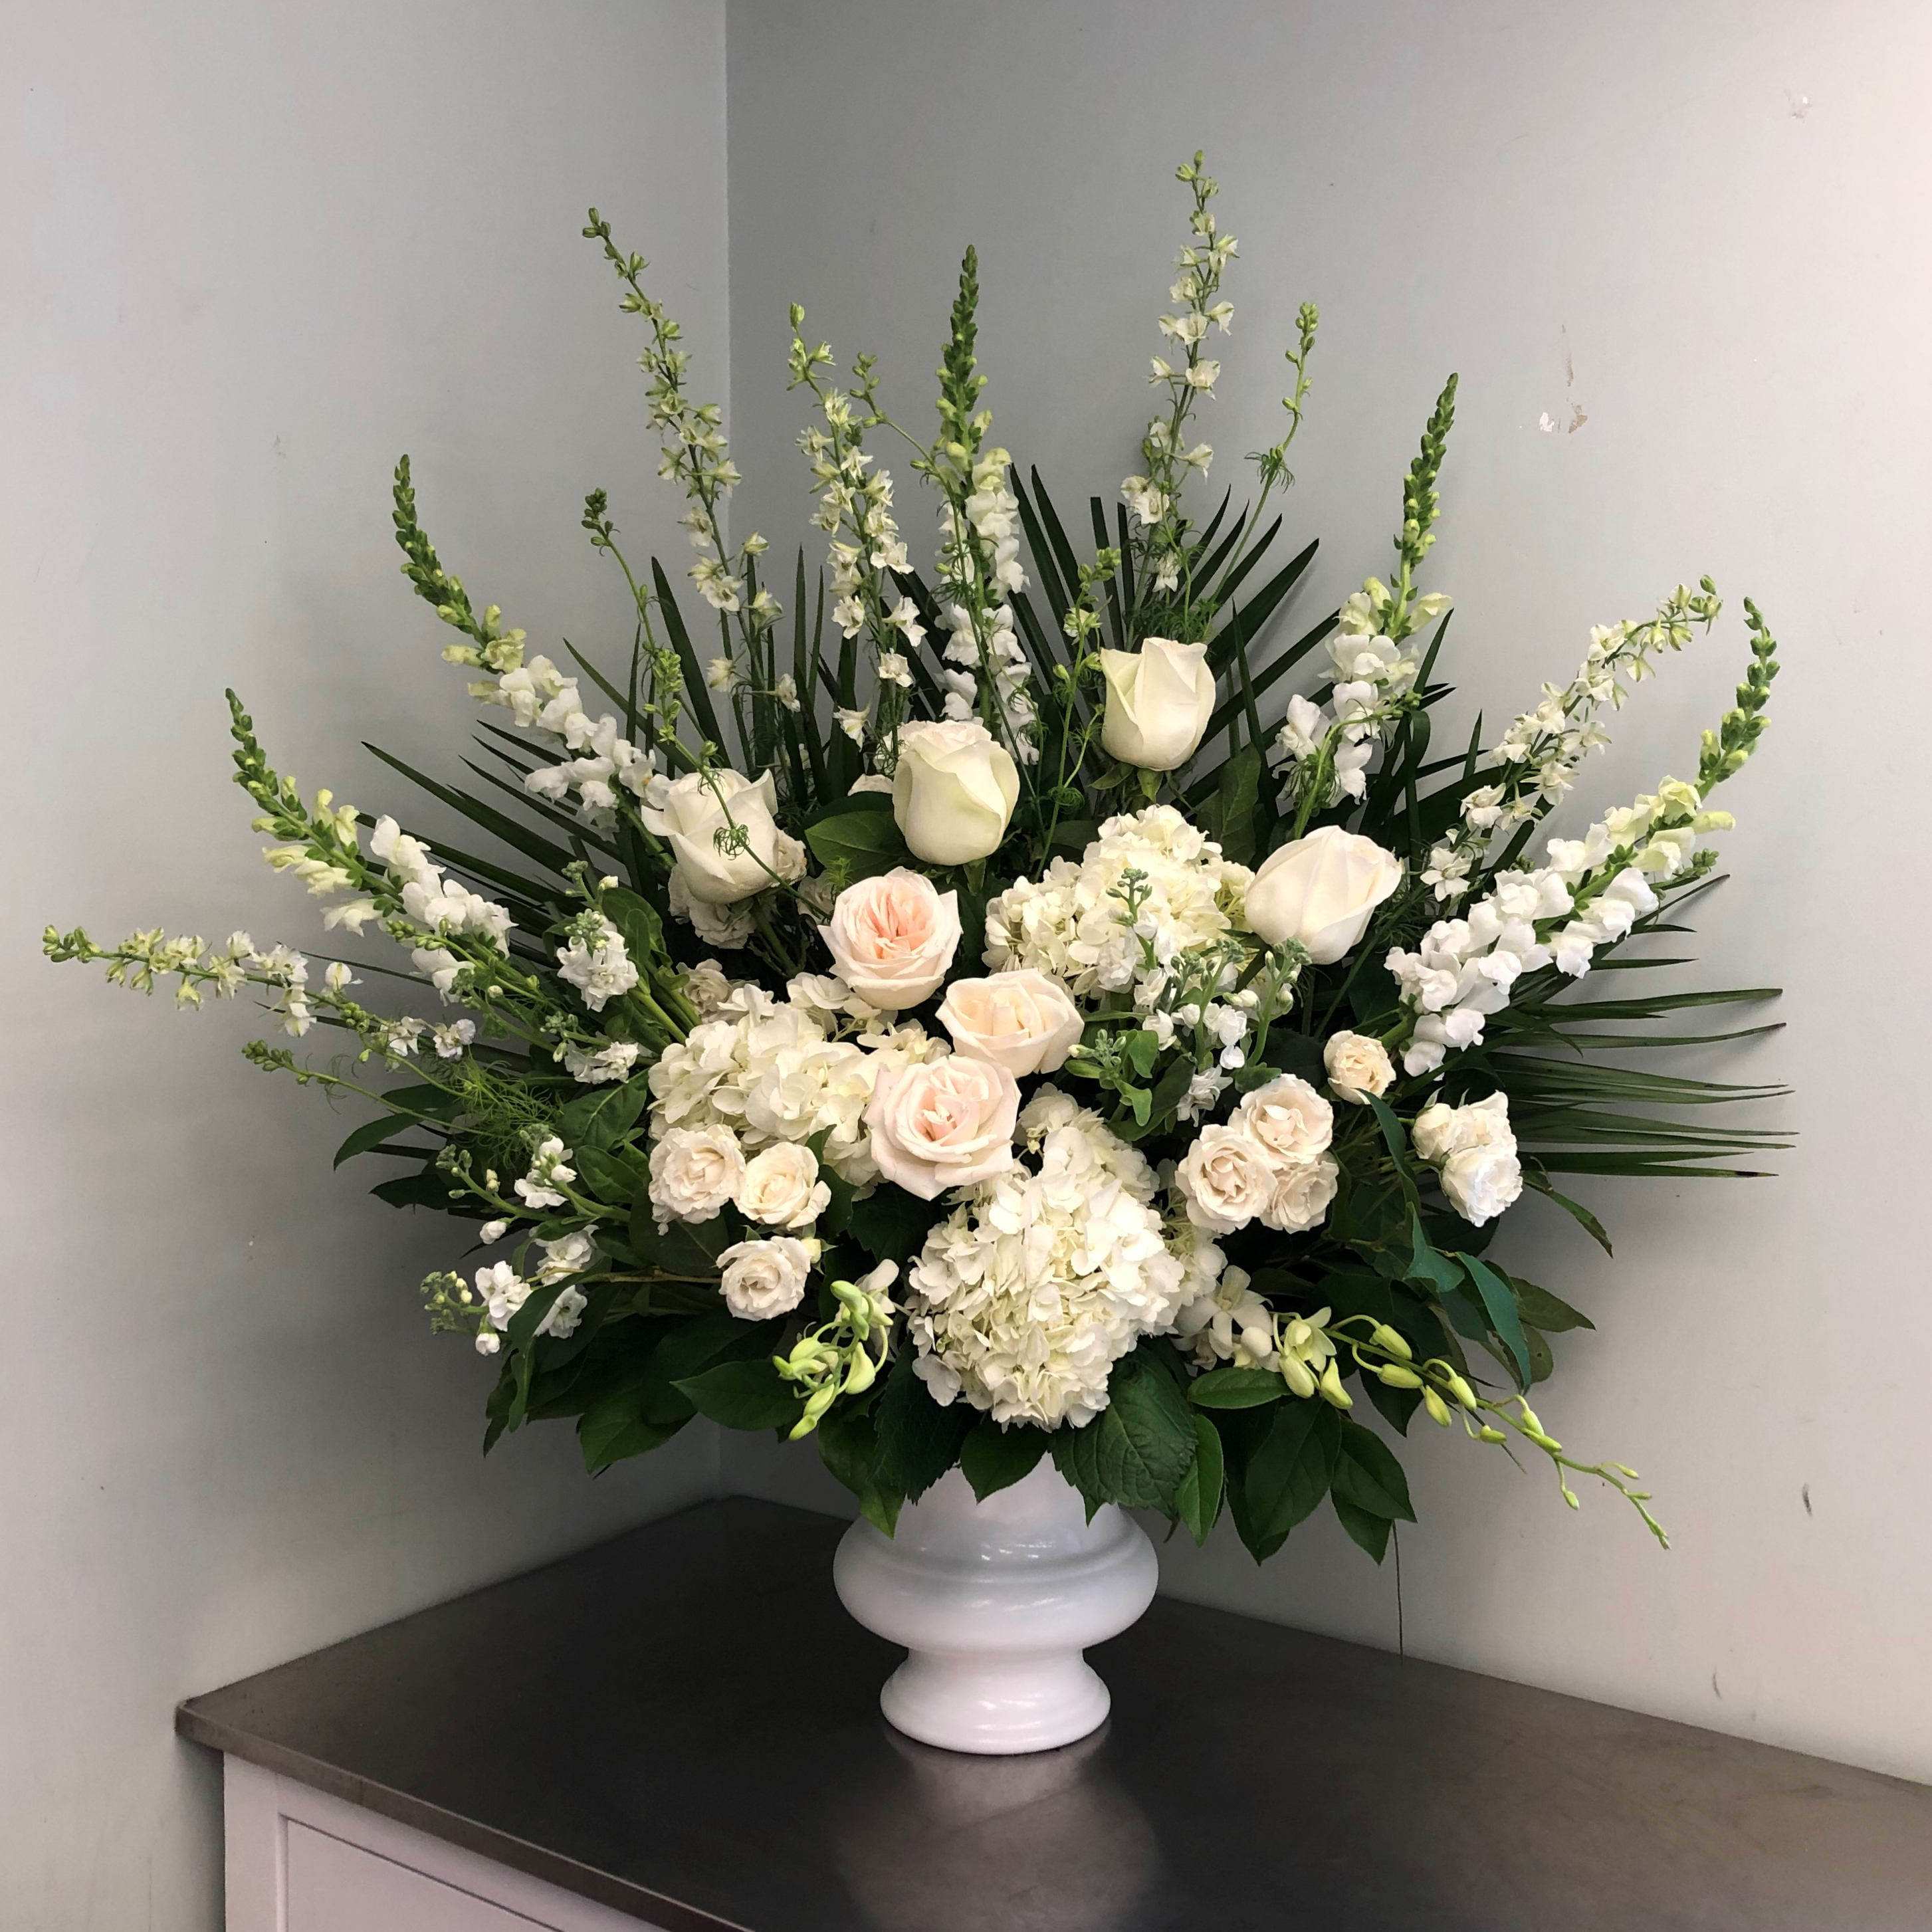 Funeral Urn Flower Arrangements - the hot hobbies